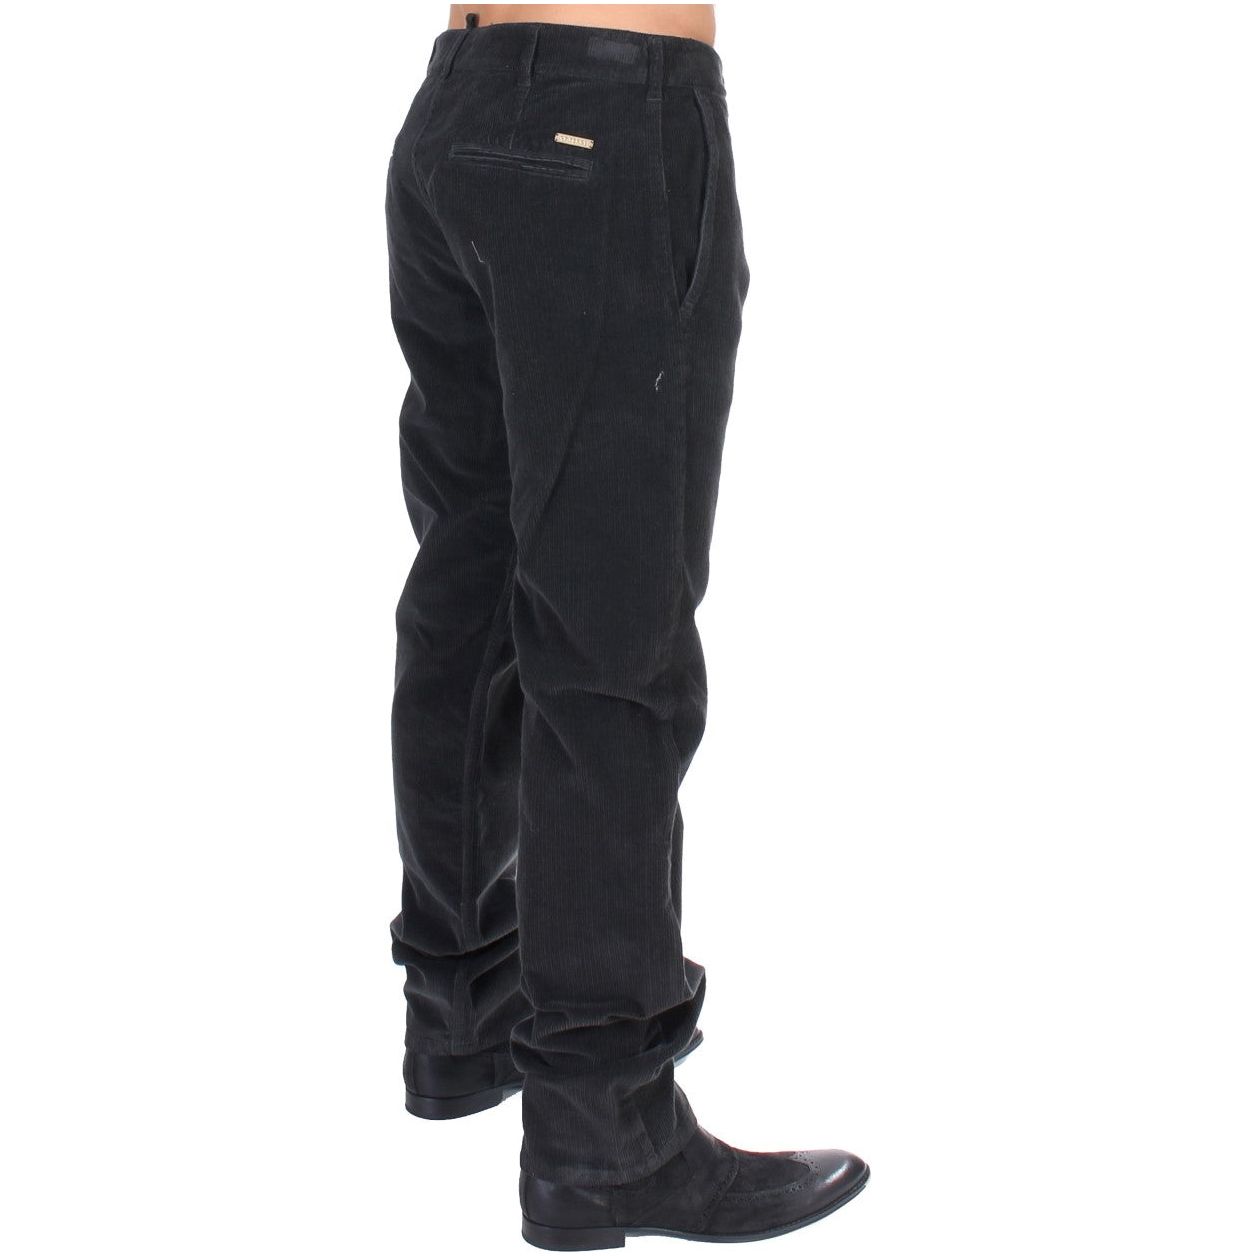 GF Ferre Elegant Black Cotton Corduroy Pants Jeans & Pants black-corduroy-cotton-straight-fit-pants 53278-black-corduroy-cotton-straight-fit-pants-3.jpg